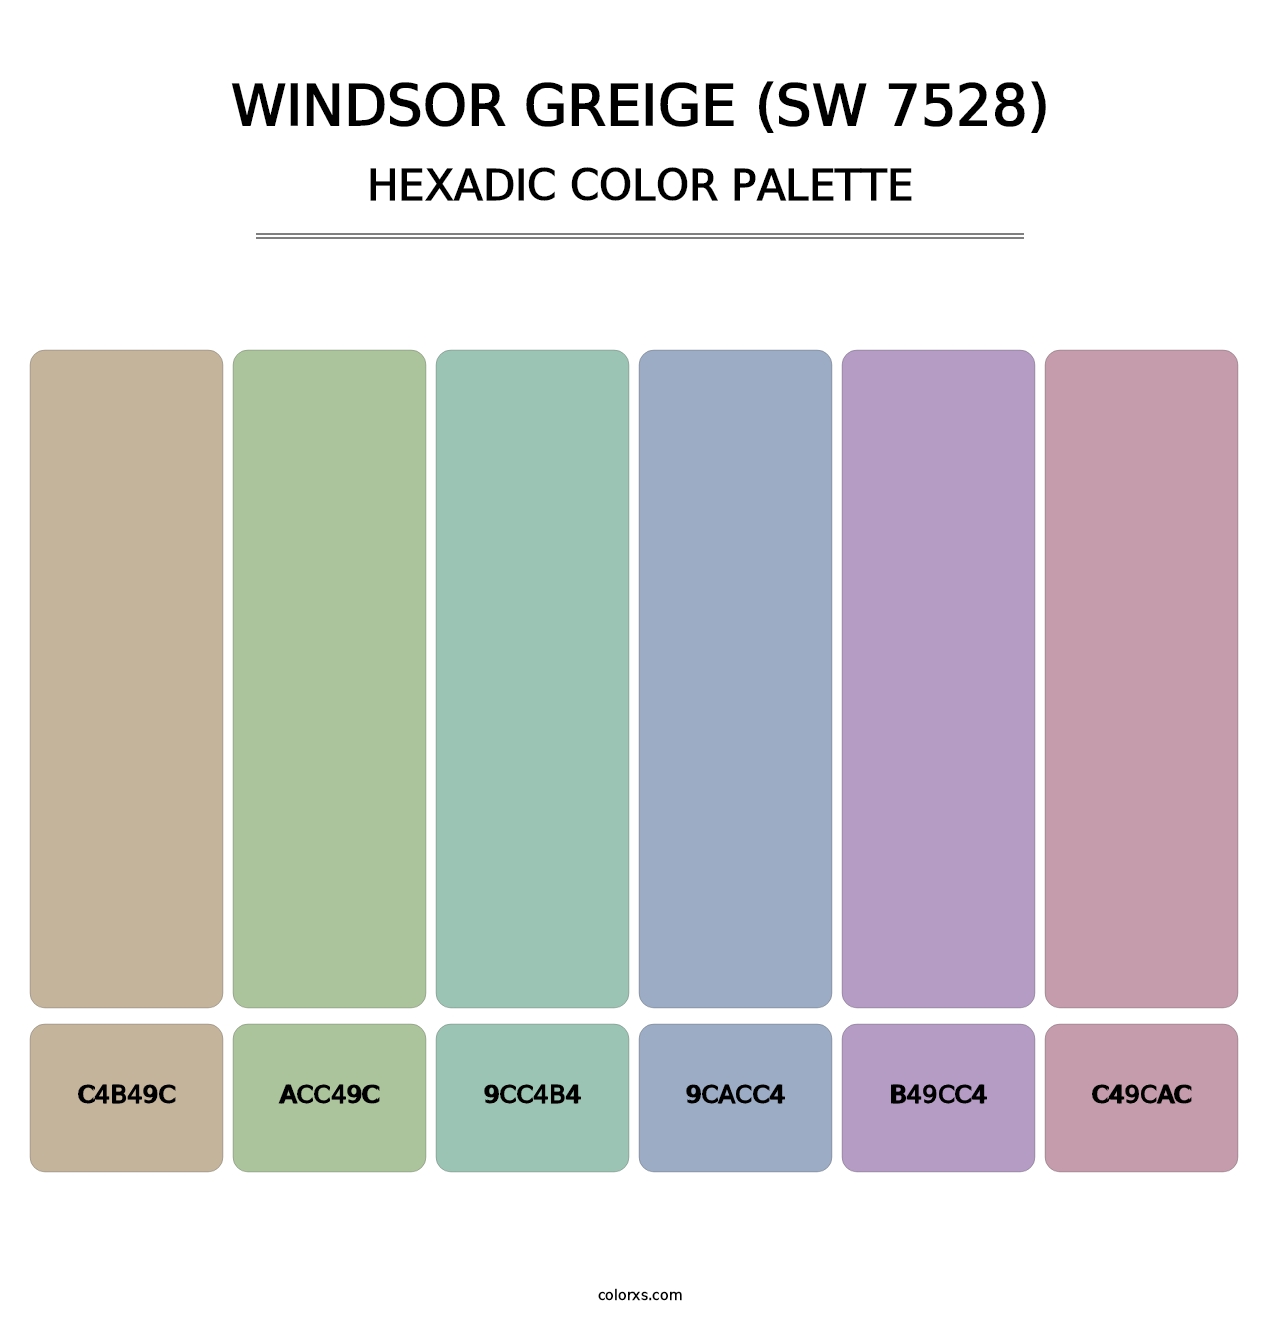 Windsor Greige (SW 7528) - Hexadic Color Palette